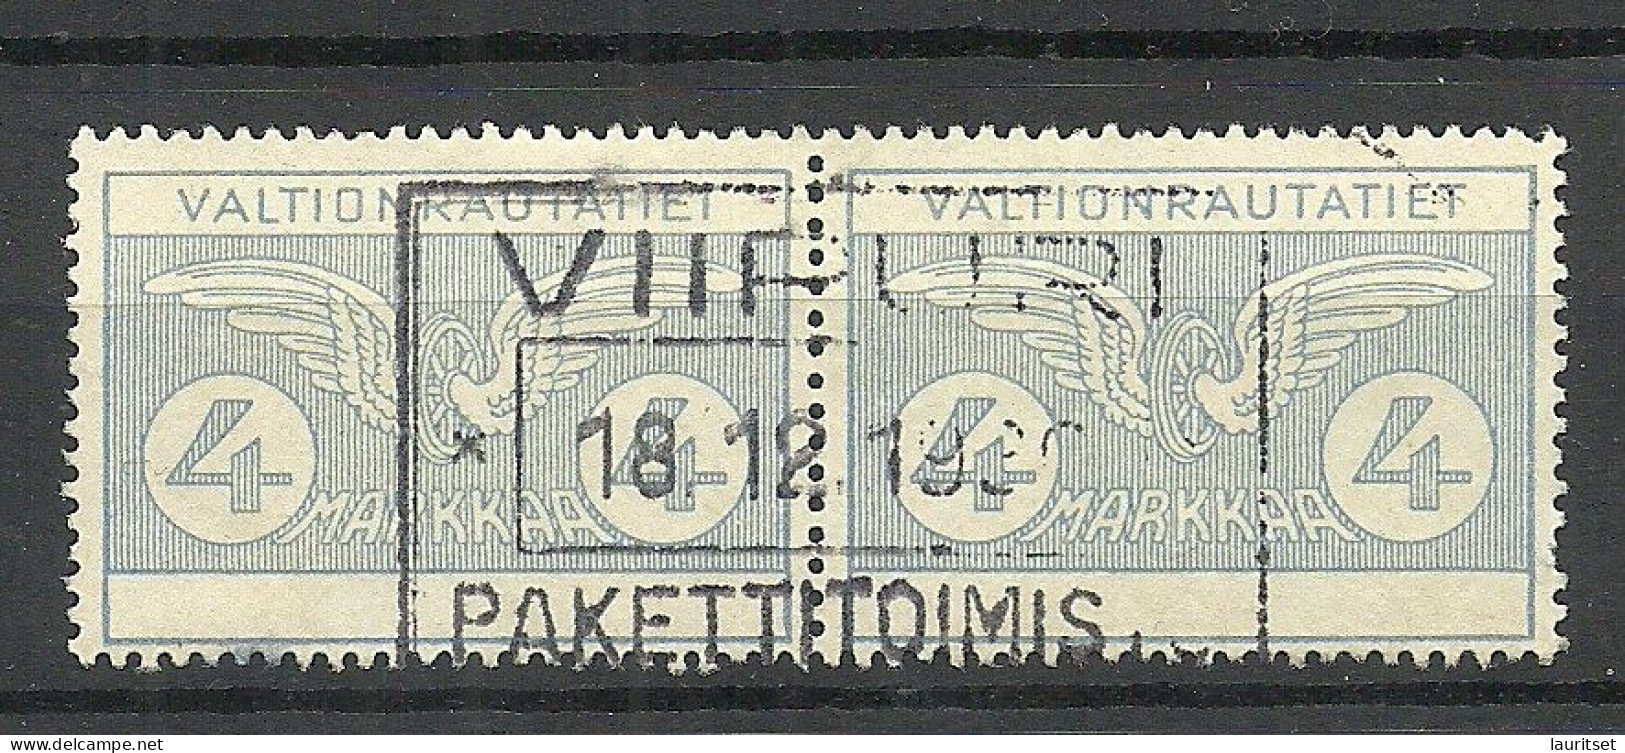 FINLAND FINNLAND 1930ies O Viipuri Railway Stamp 4 MK As Pair - Postpaketten